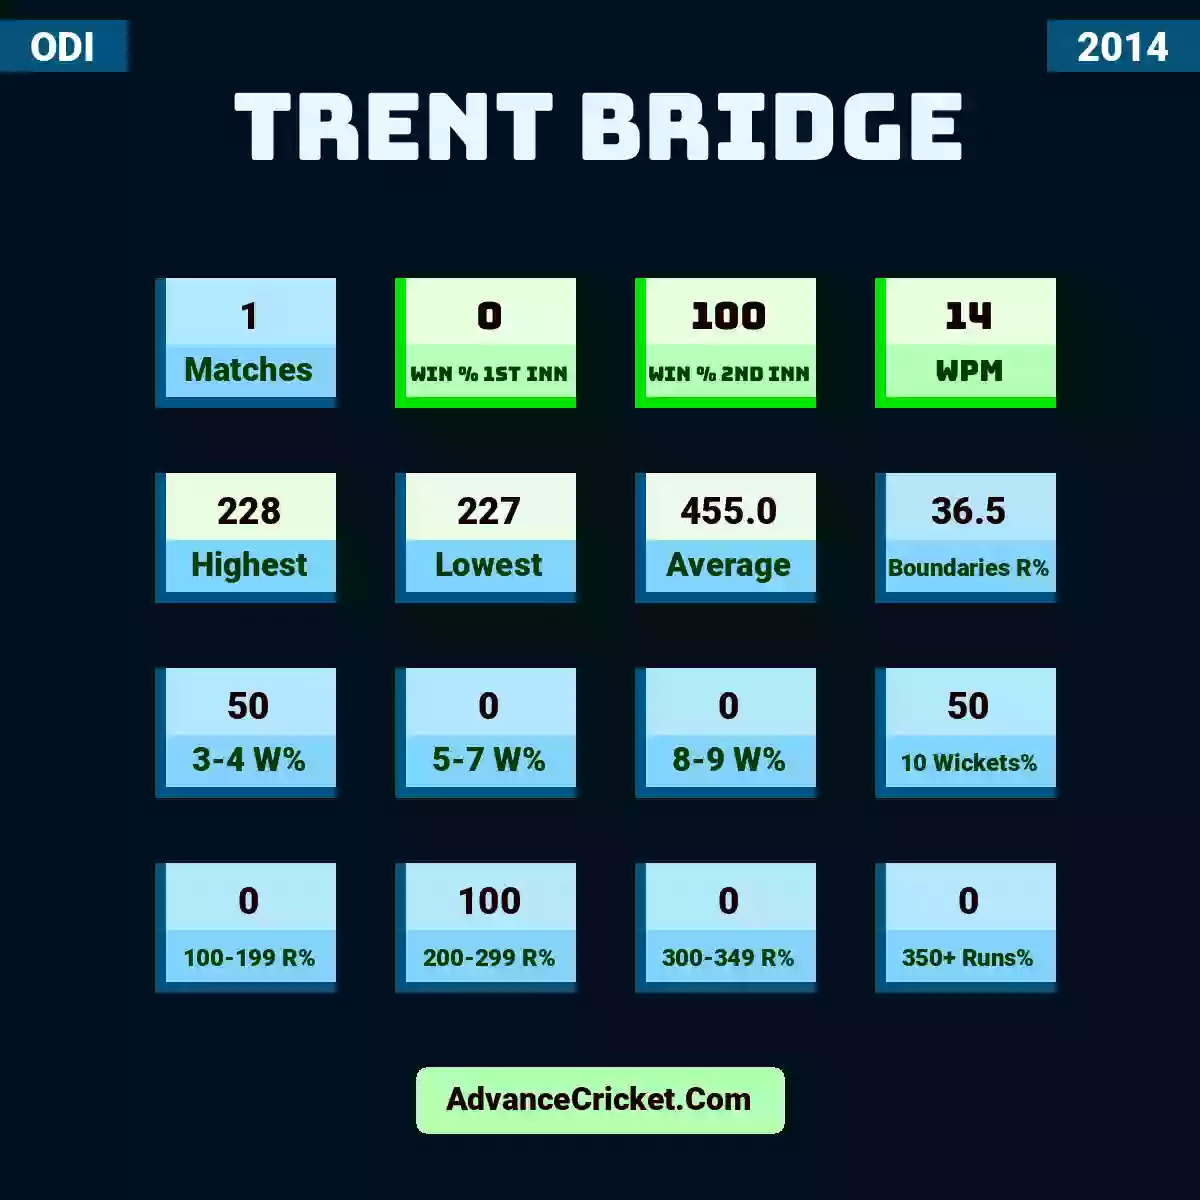 Image showing Trent Bridge with Matches: 1, Win % 1st Inn: 0, Win % 2nd Inn: 100, WPM: 14, Highest: 228, Lowest: 227, Average: 455.0, Boundaries R%: 36.5, 3-4 W%: 50, 5-7 W%: 0, 8-9 W%: 0, 10 Wickets%: 50, 100-199 R%: 0, 200-299 R%: 100, 300-349 R%: 0, 350+ Runs%: 0.